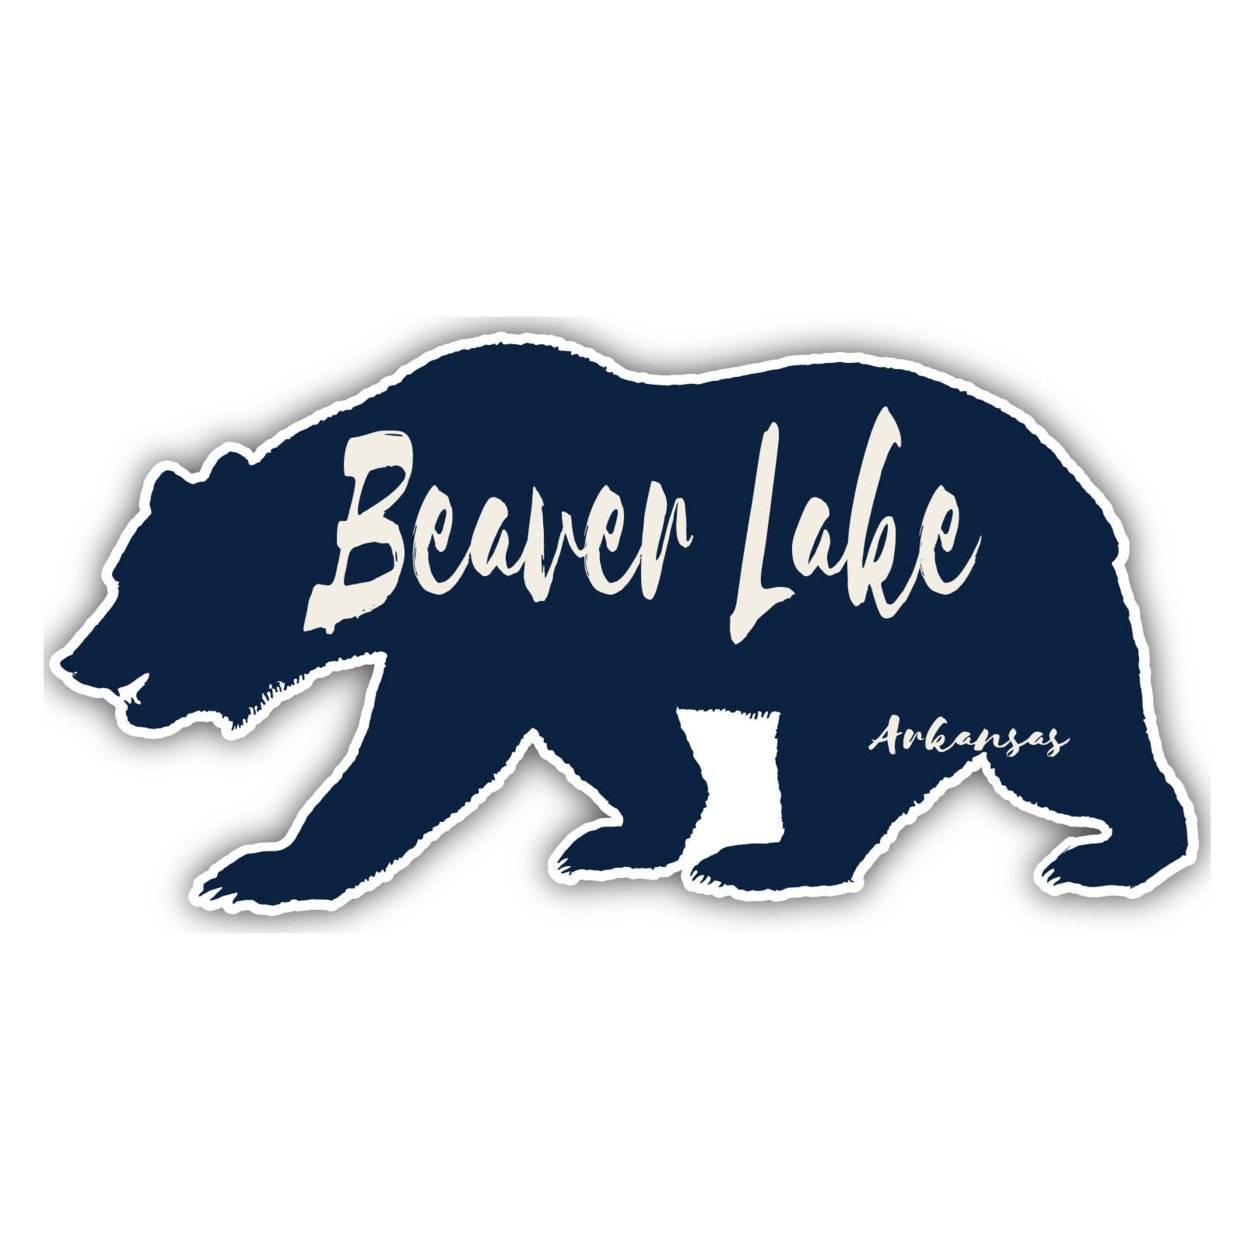 Beaver Lake Arkansas Souvenir Decorative Stickers (Choose Theme And Size) - Single Unit, 10-Inch, Adventures Awaits